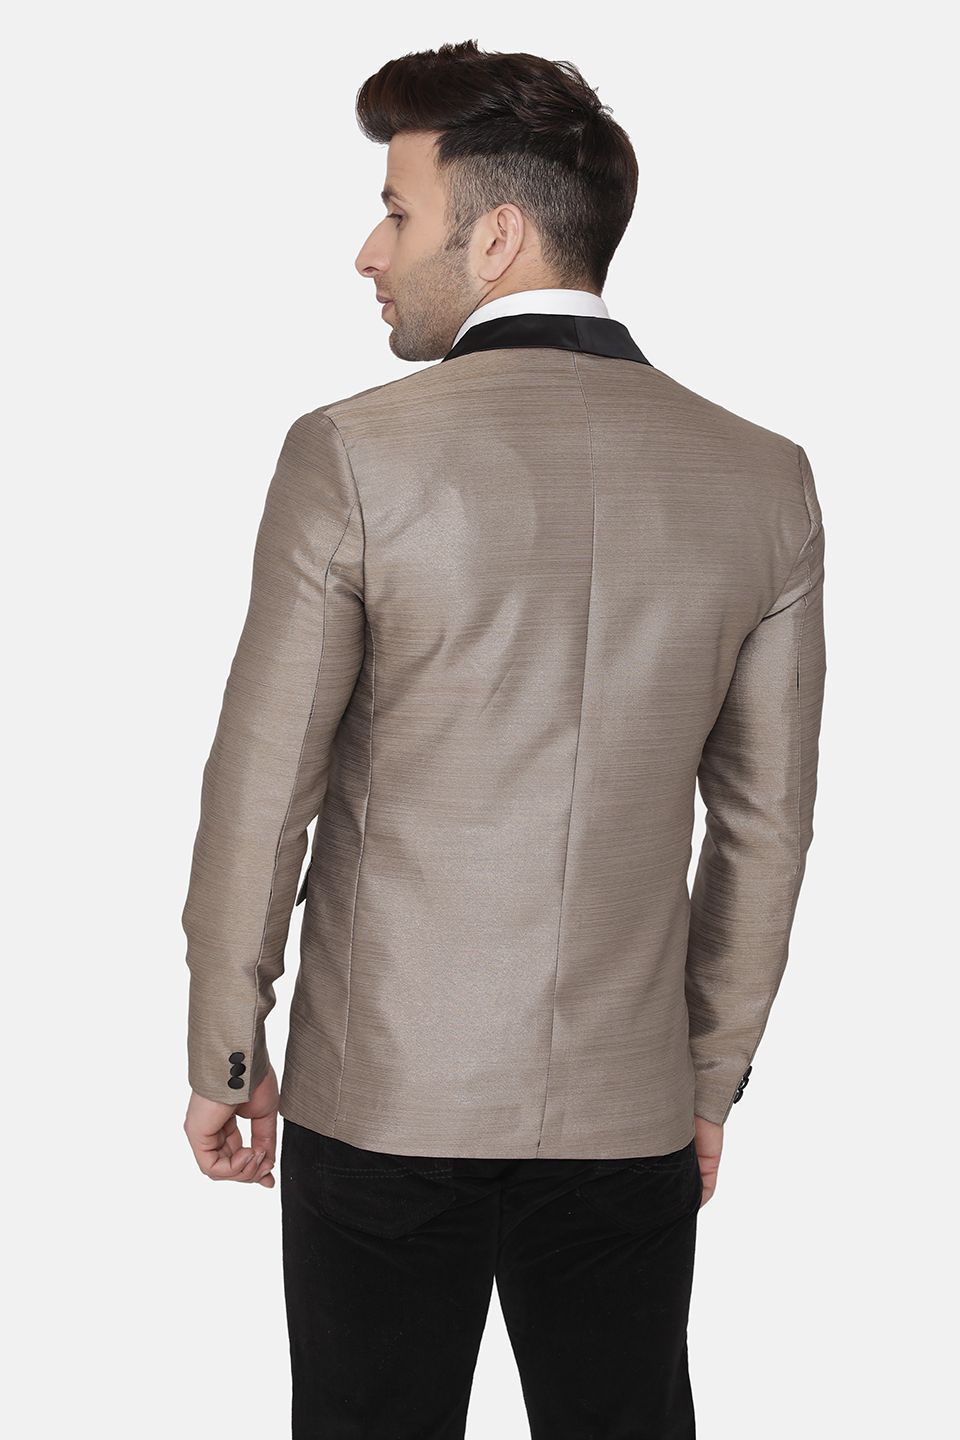 Wintage Men's Polyester Casual and Festive Blazer Coat Jacket : Golden